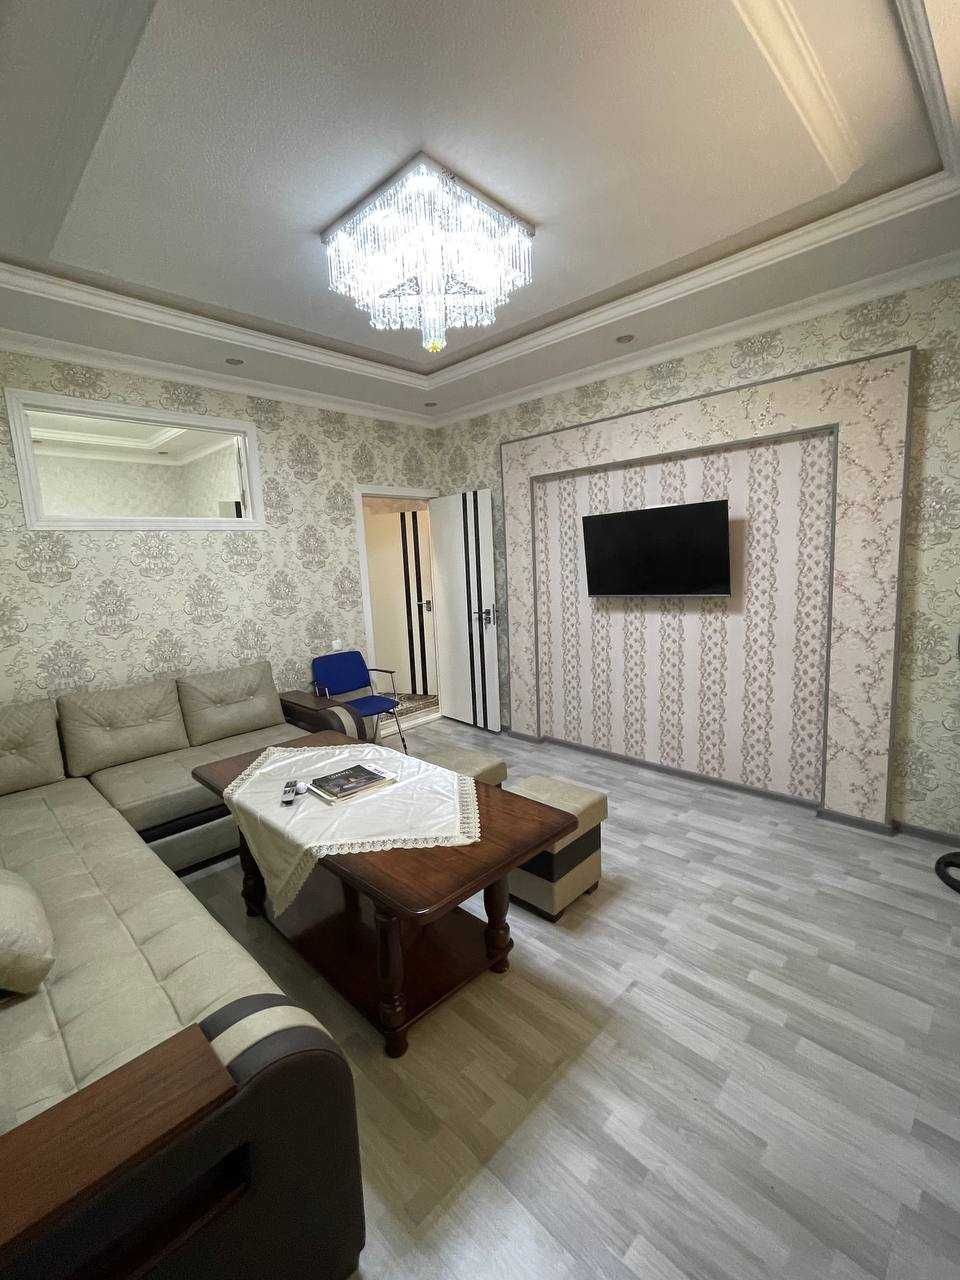 СДАЁТСЯ В АРЕНДУ 2х комнатная квартира Узбекистанская (Пепирони)